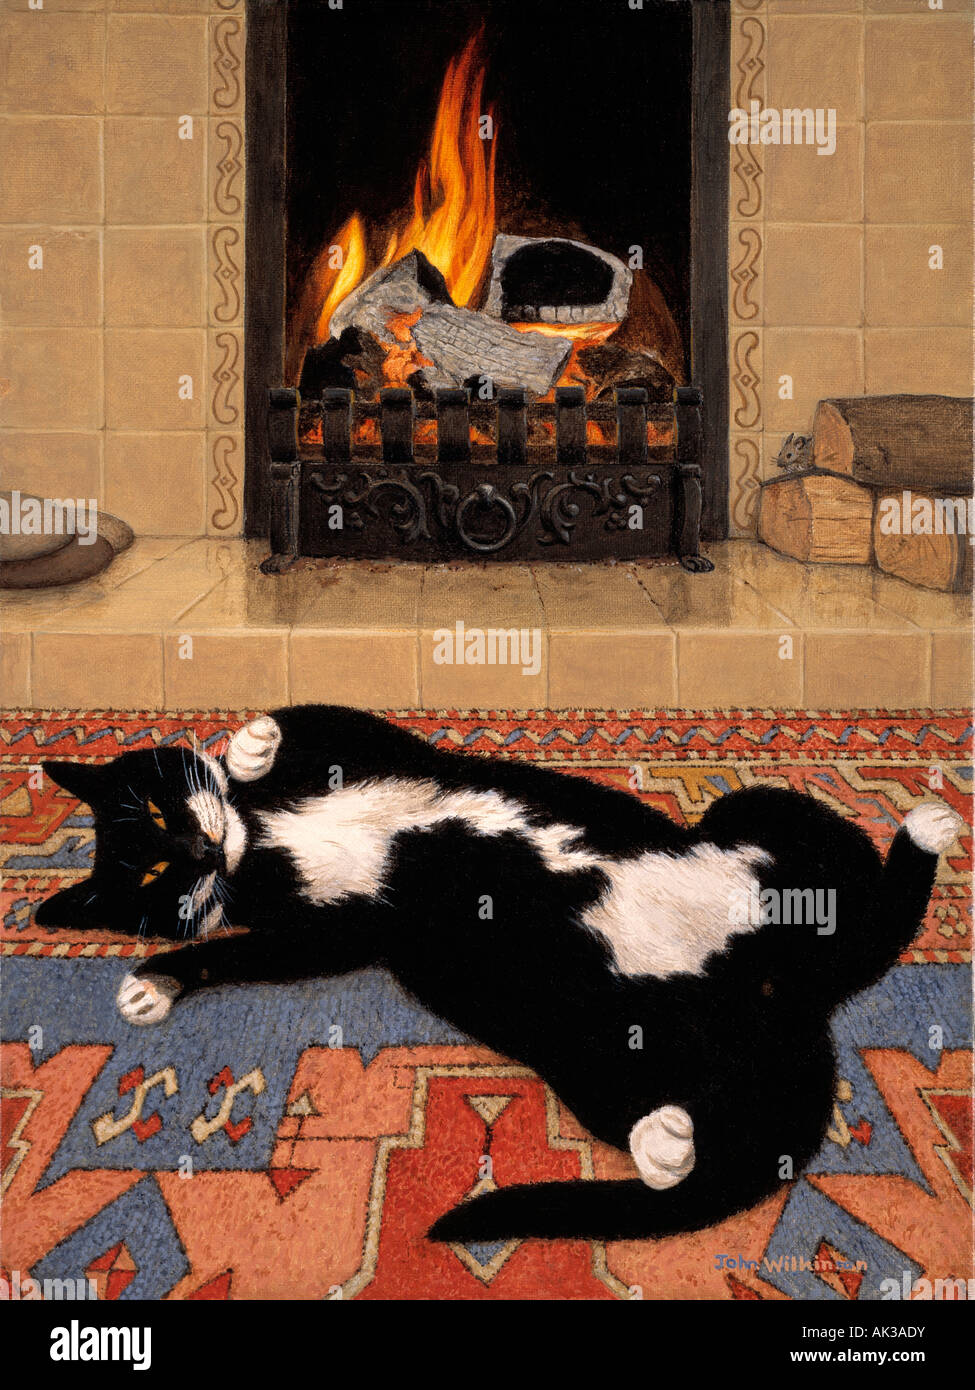 Illustration, Animal, Cat, Fireside, Stock Photo